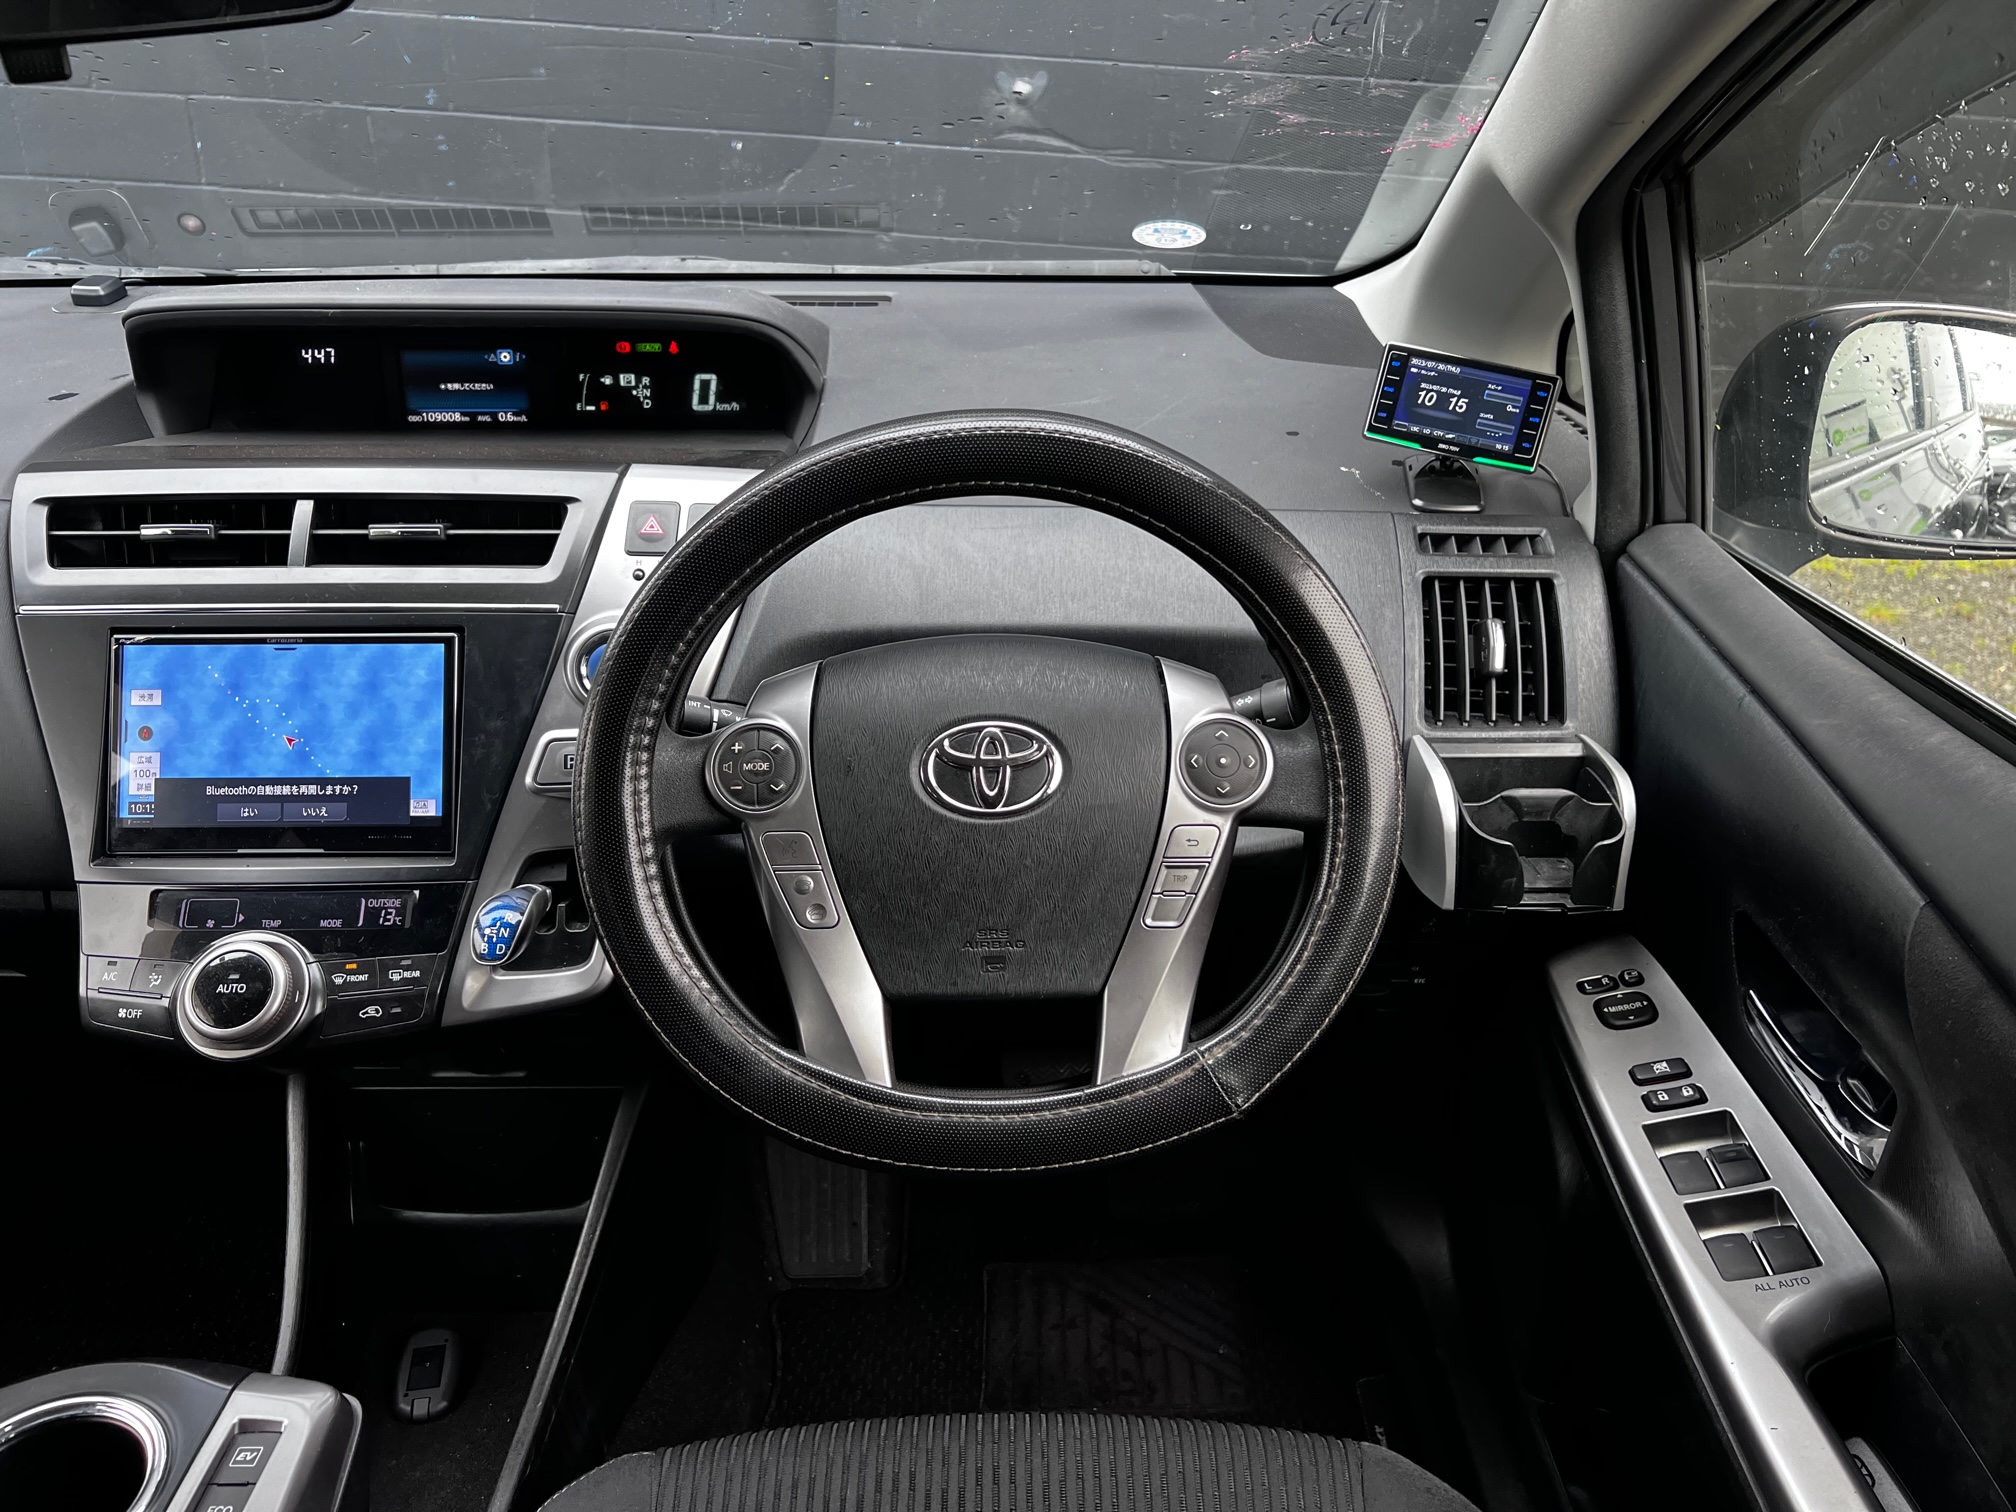 Toyota Alpha Prius 2016 Image 14